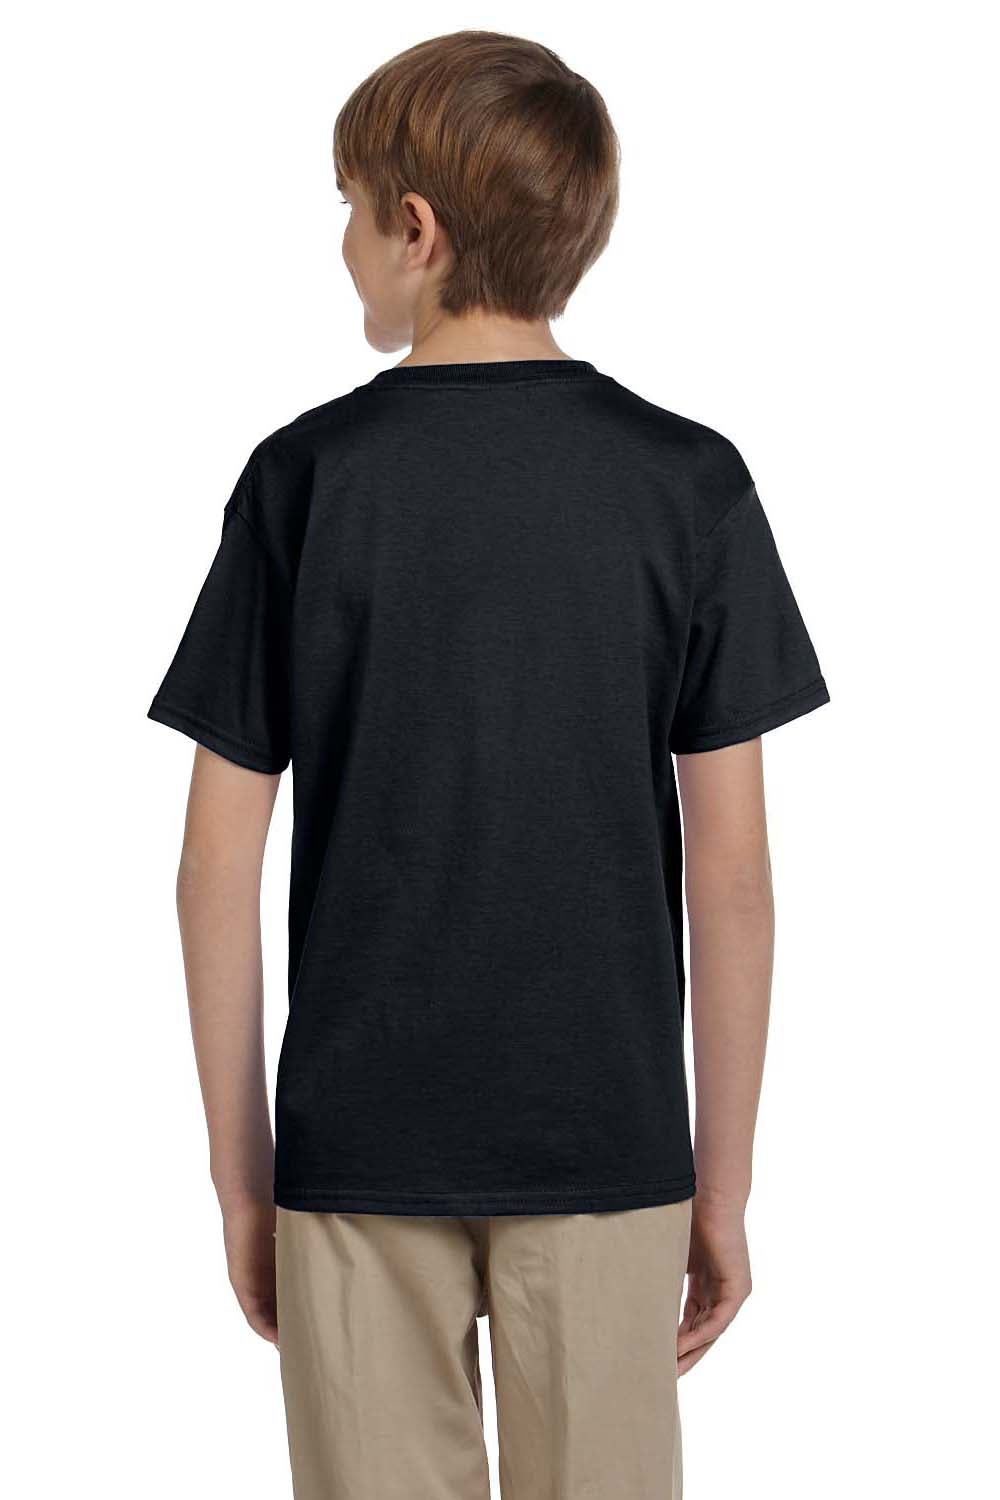 Hanes 5370 Youth EcoSmart Short Sleeve Crewneck T-Shirt Black Back